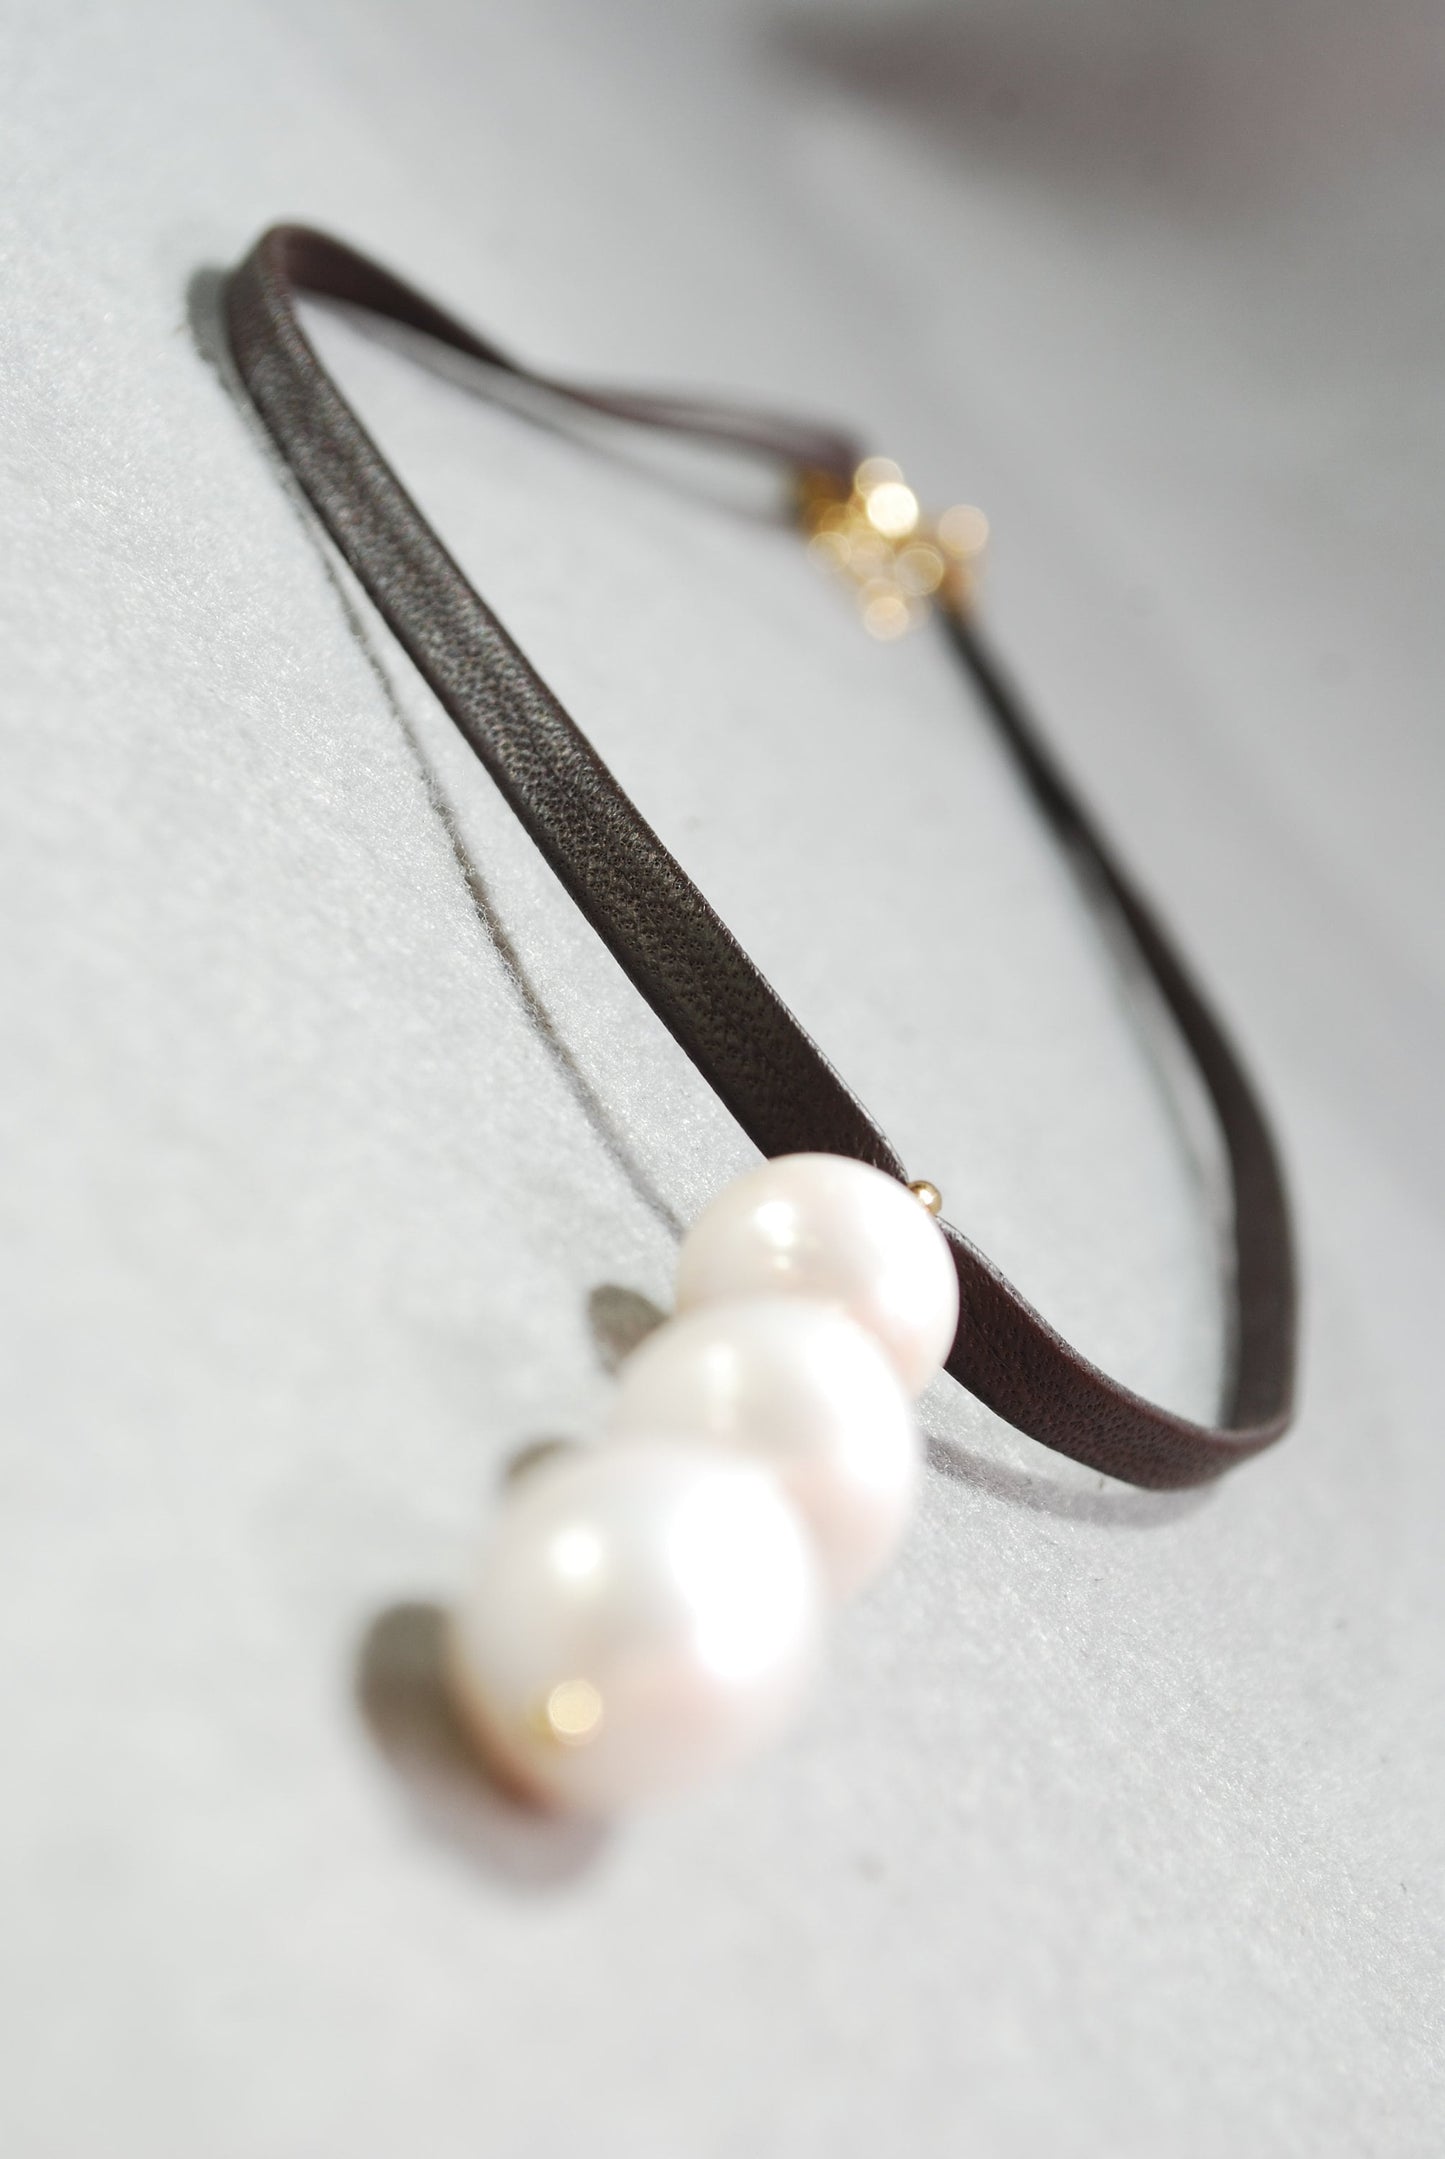 3 Large Freshwater Pearl & leather cord necklace,  formal office wear, Estibela design, 39cm - 15"